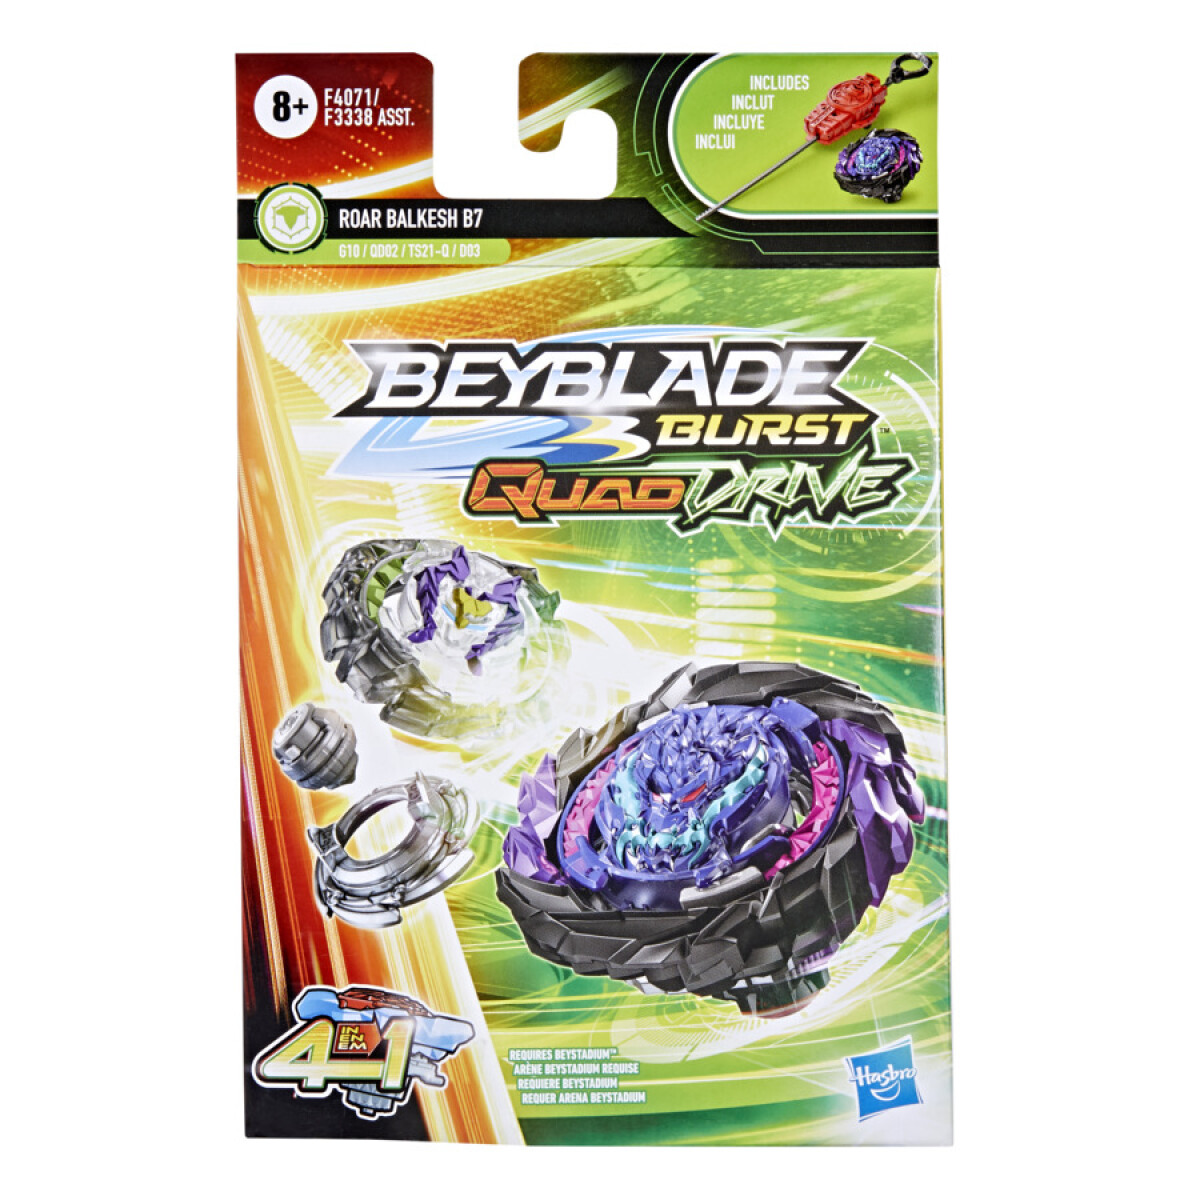 Beyblade Burst Quad Drive Kit Inicial Top con Lanzador - 001 